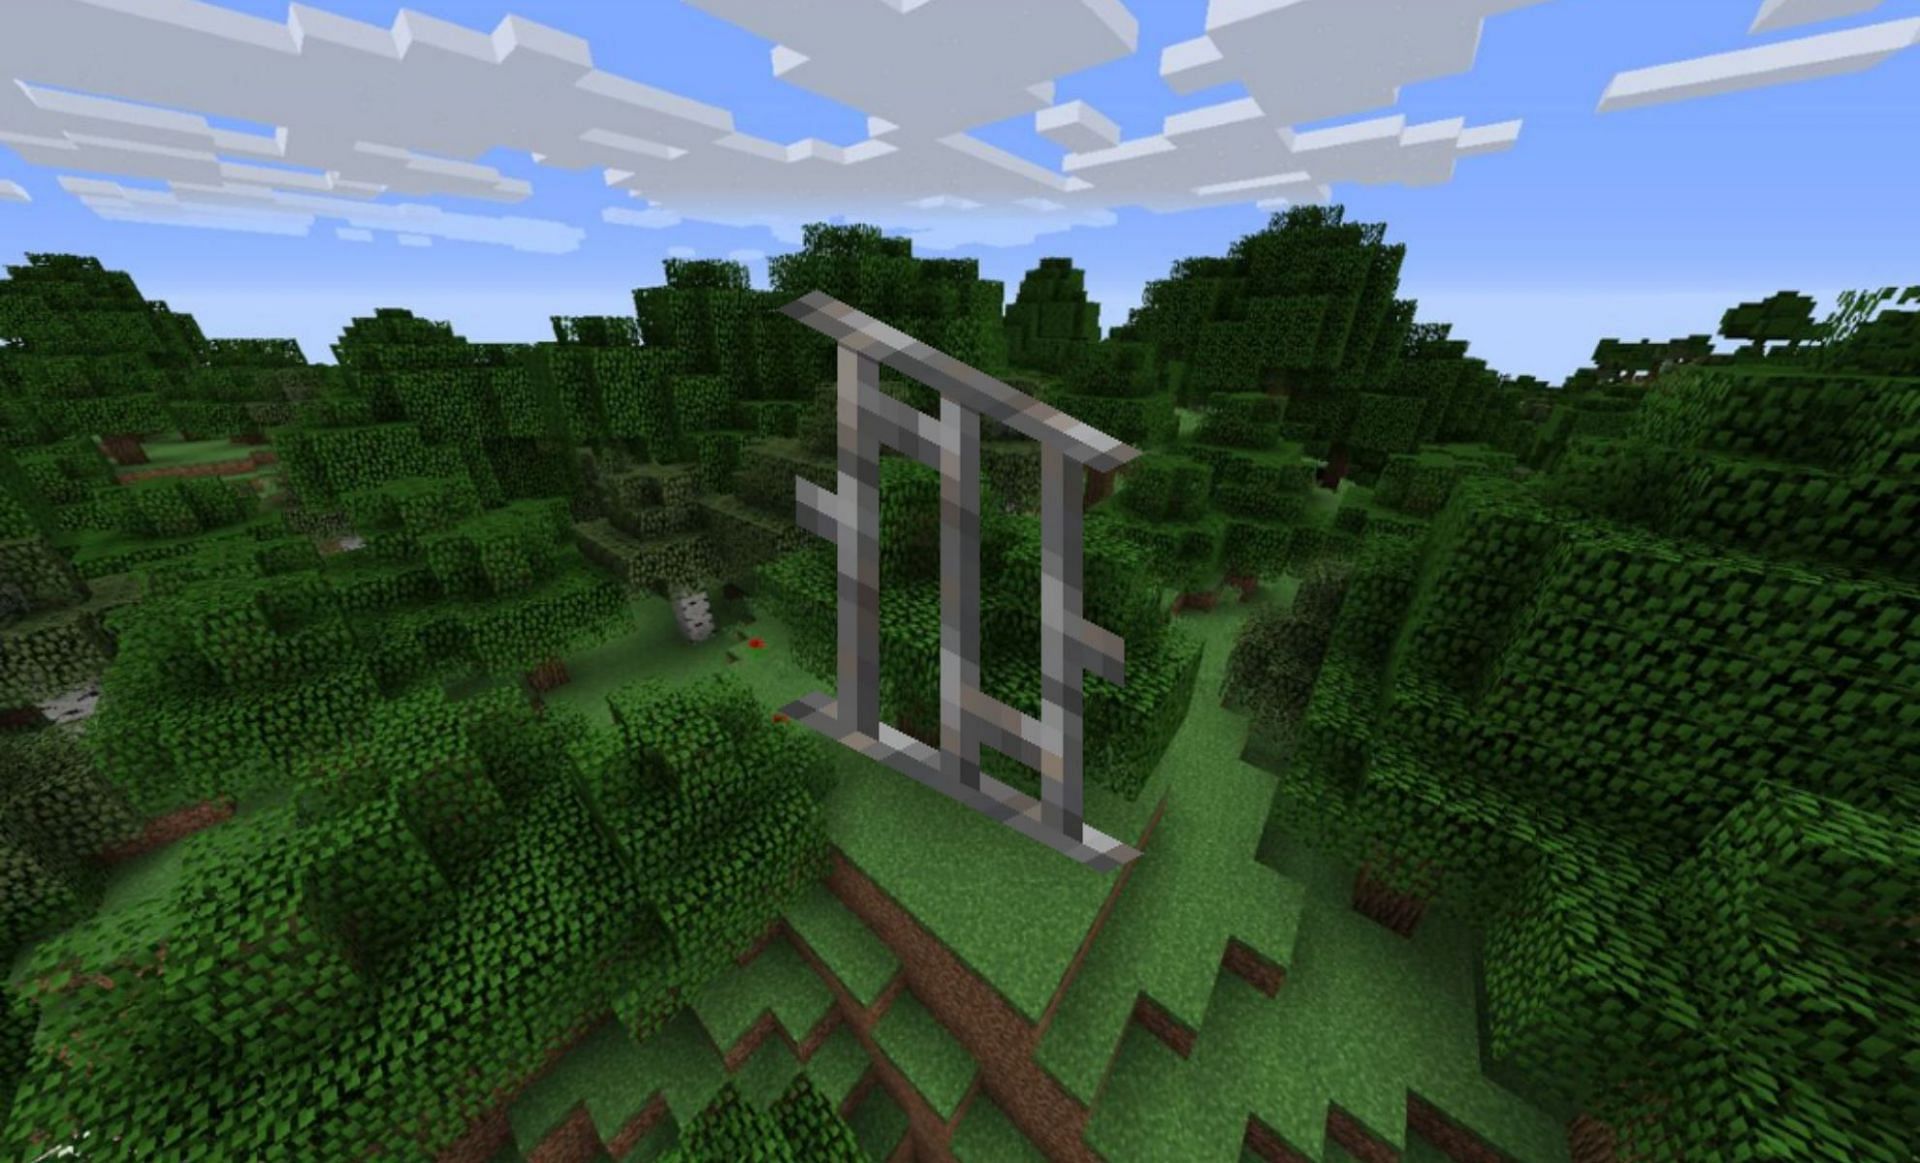 Iron bars in Minecraft (Image via Minecraft)